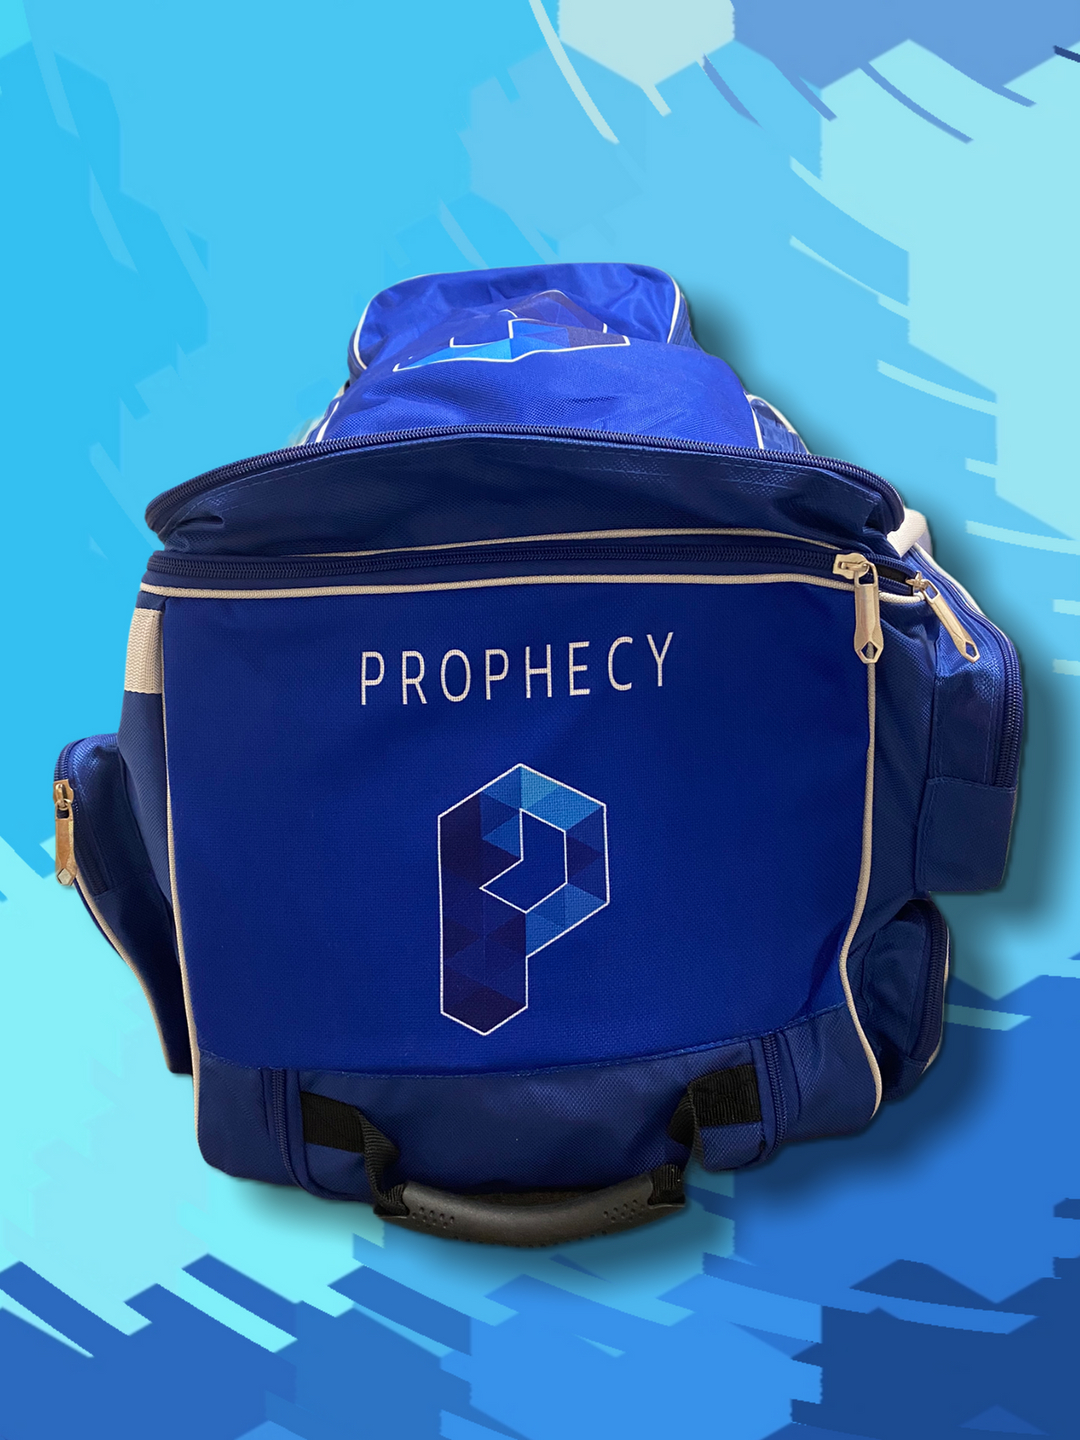 Prophecy Elite Cricket Bag